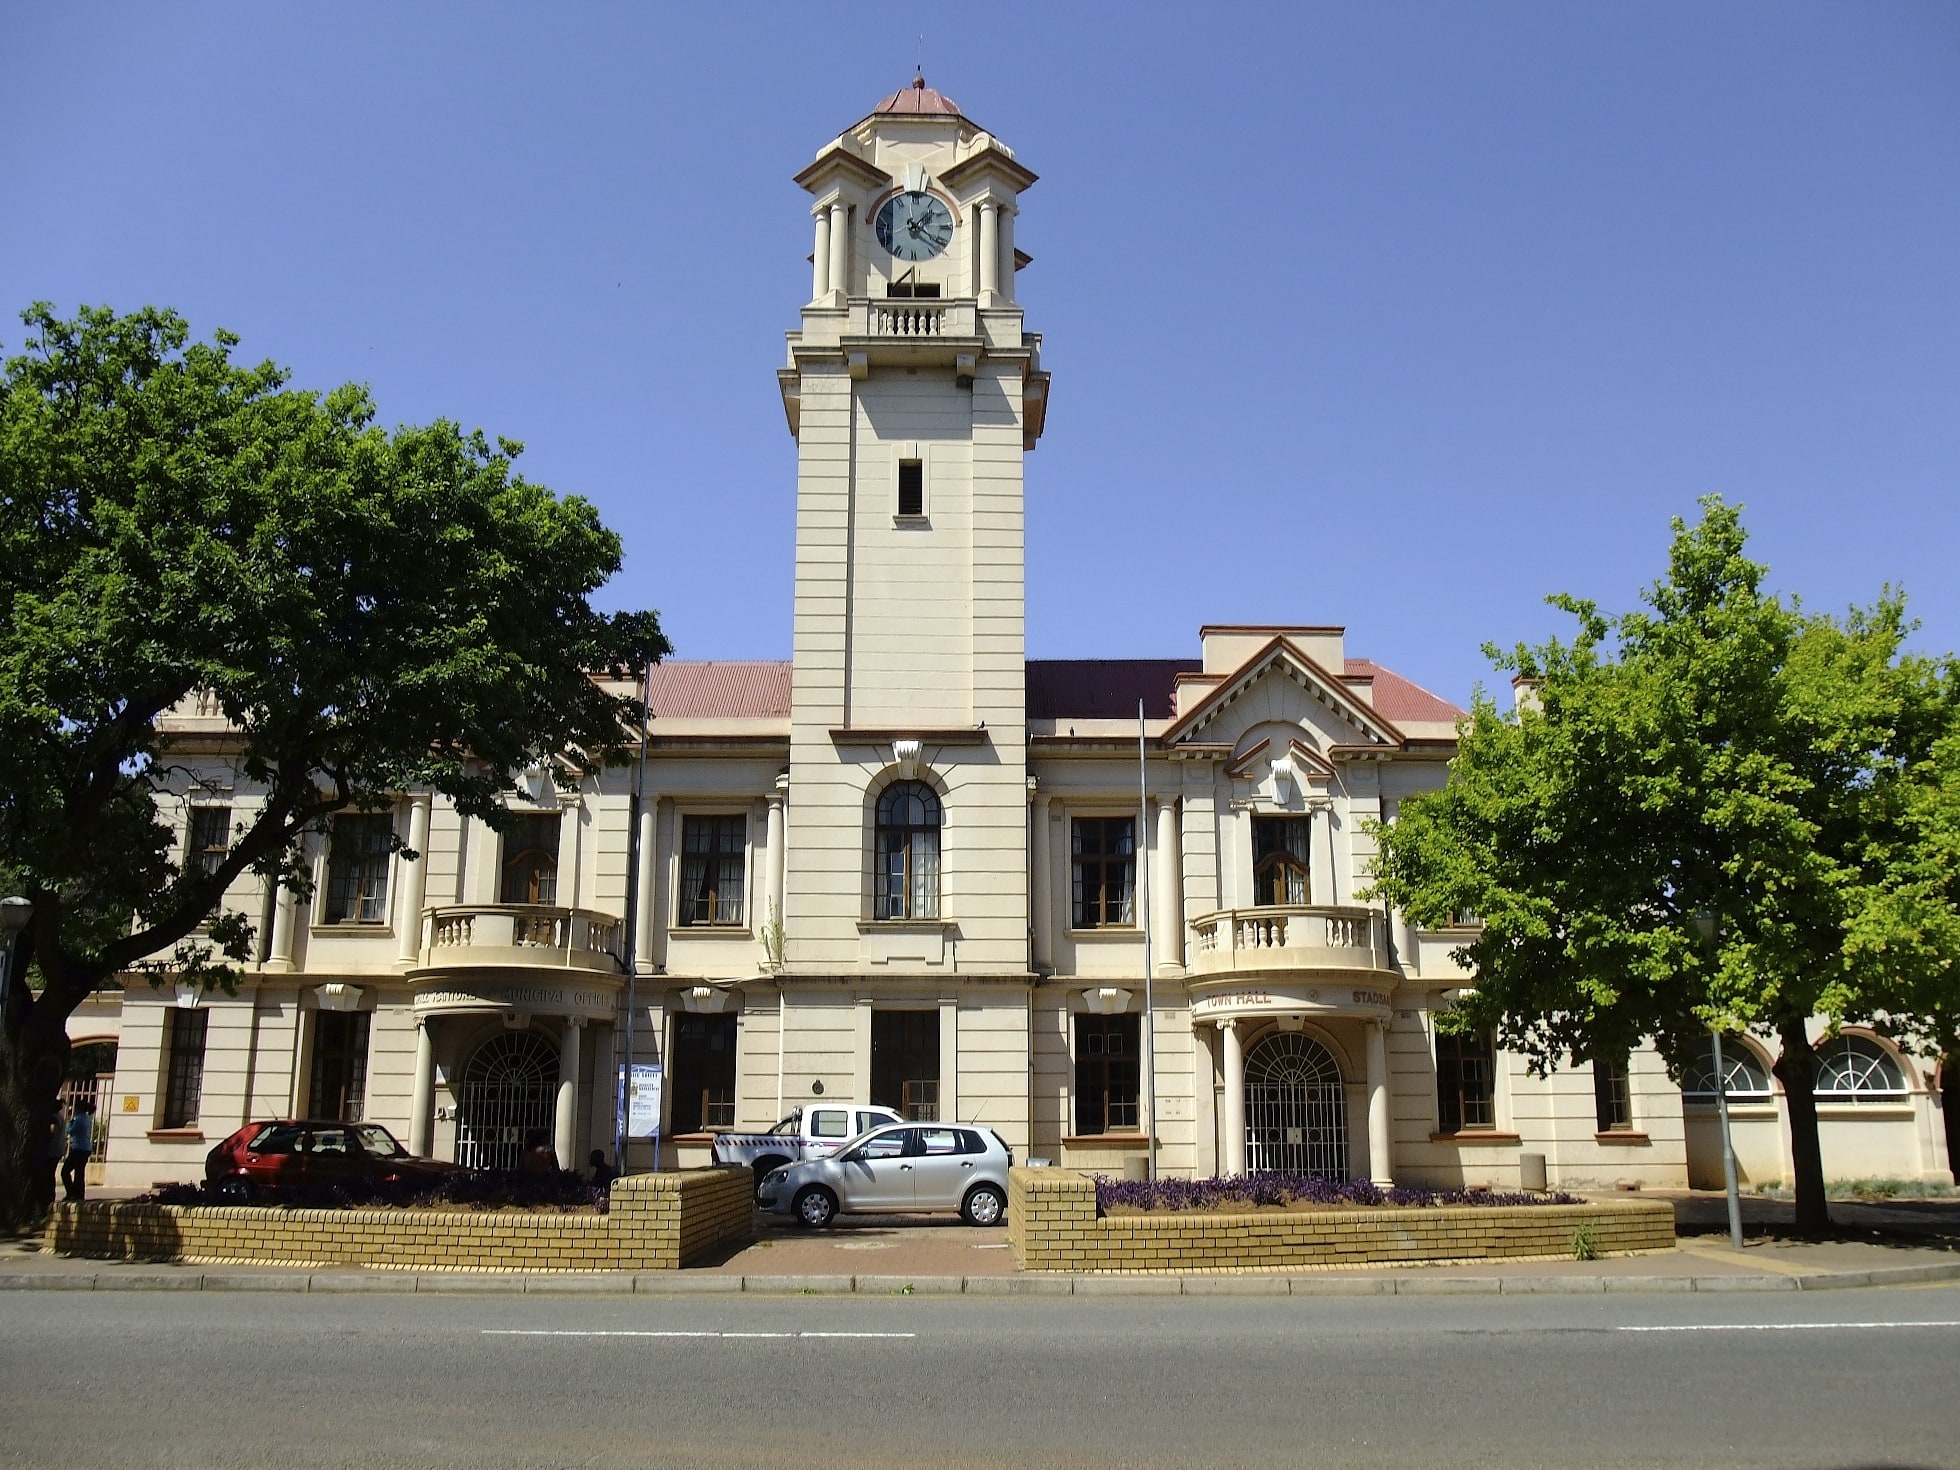 Potchefstroom, South Africa